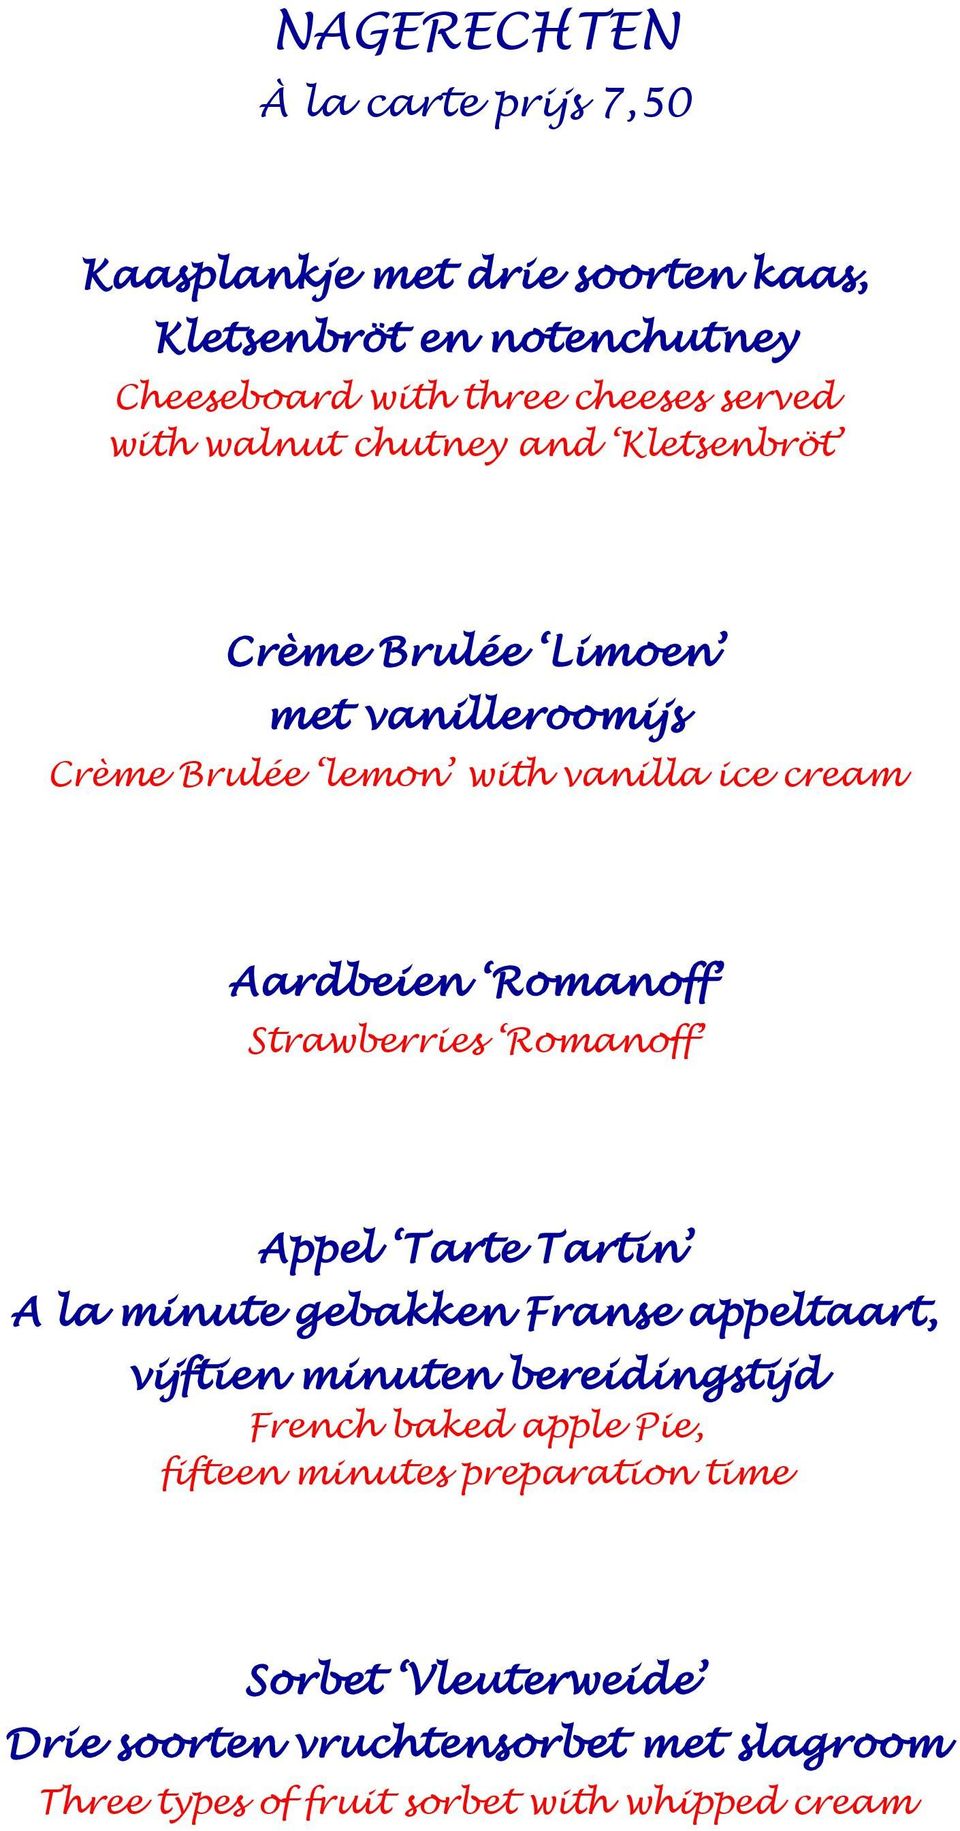 Strawberries Romanoff Appel Tarte Tartin A la minute gebakken Franse appeltaart, vijftien minuten bereidingstijd French baked apple Pie,